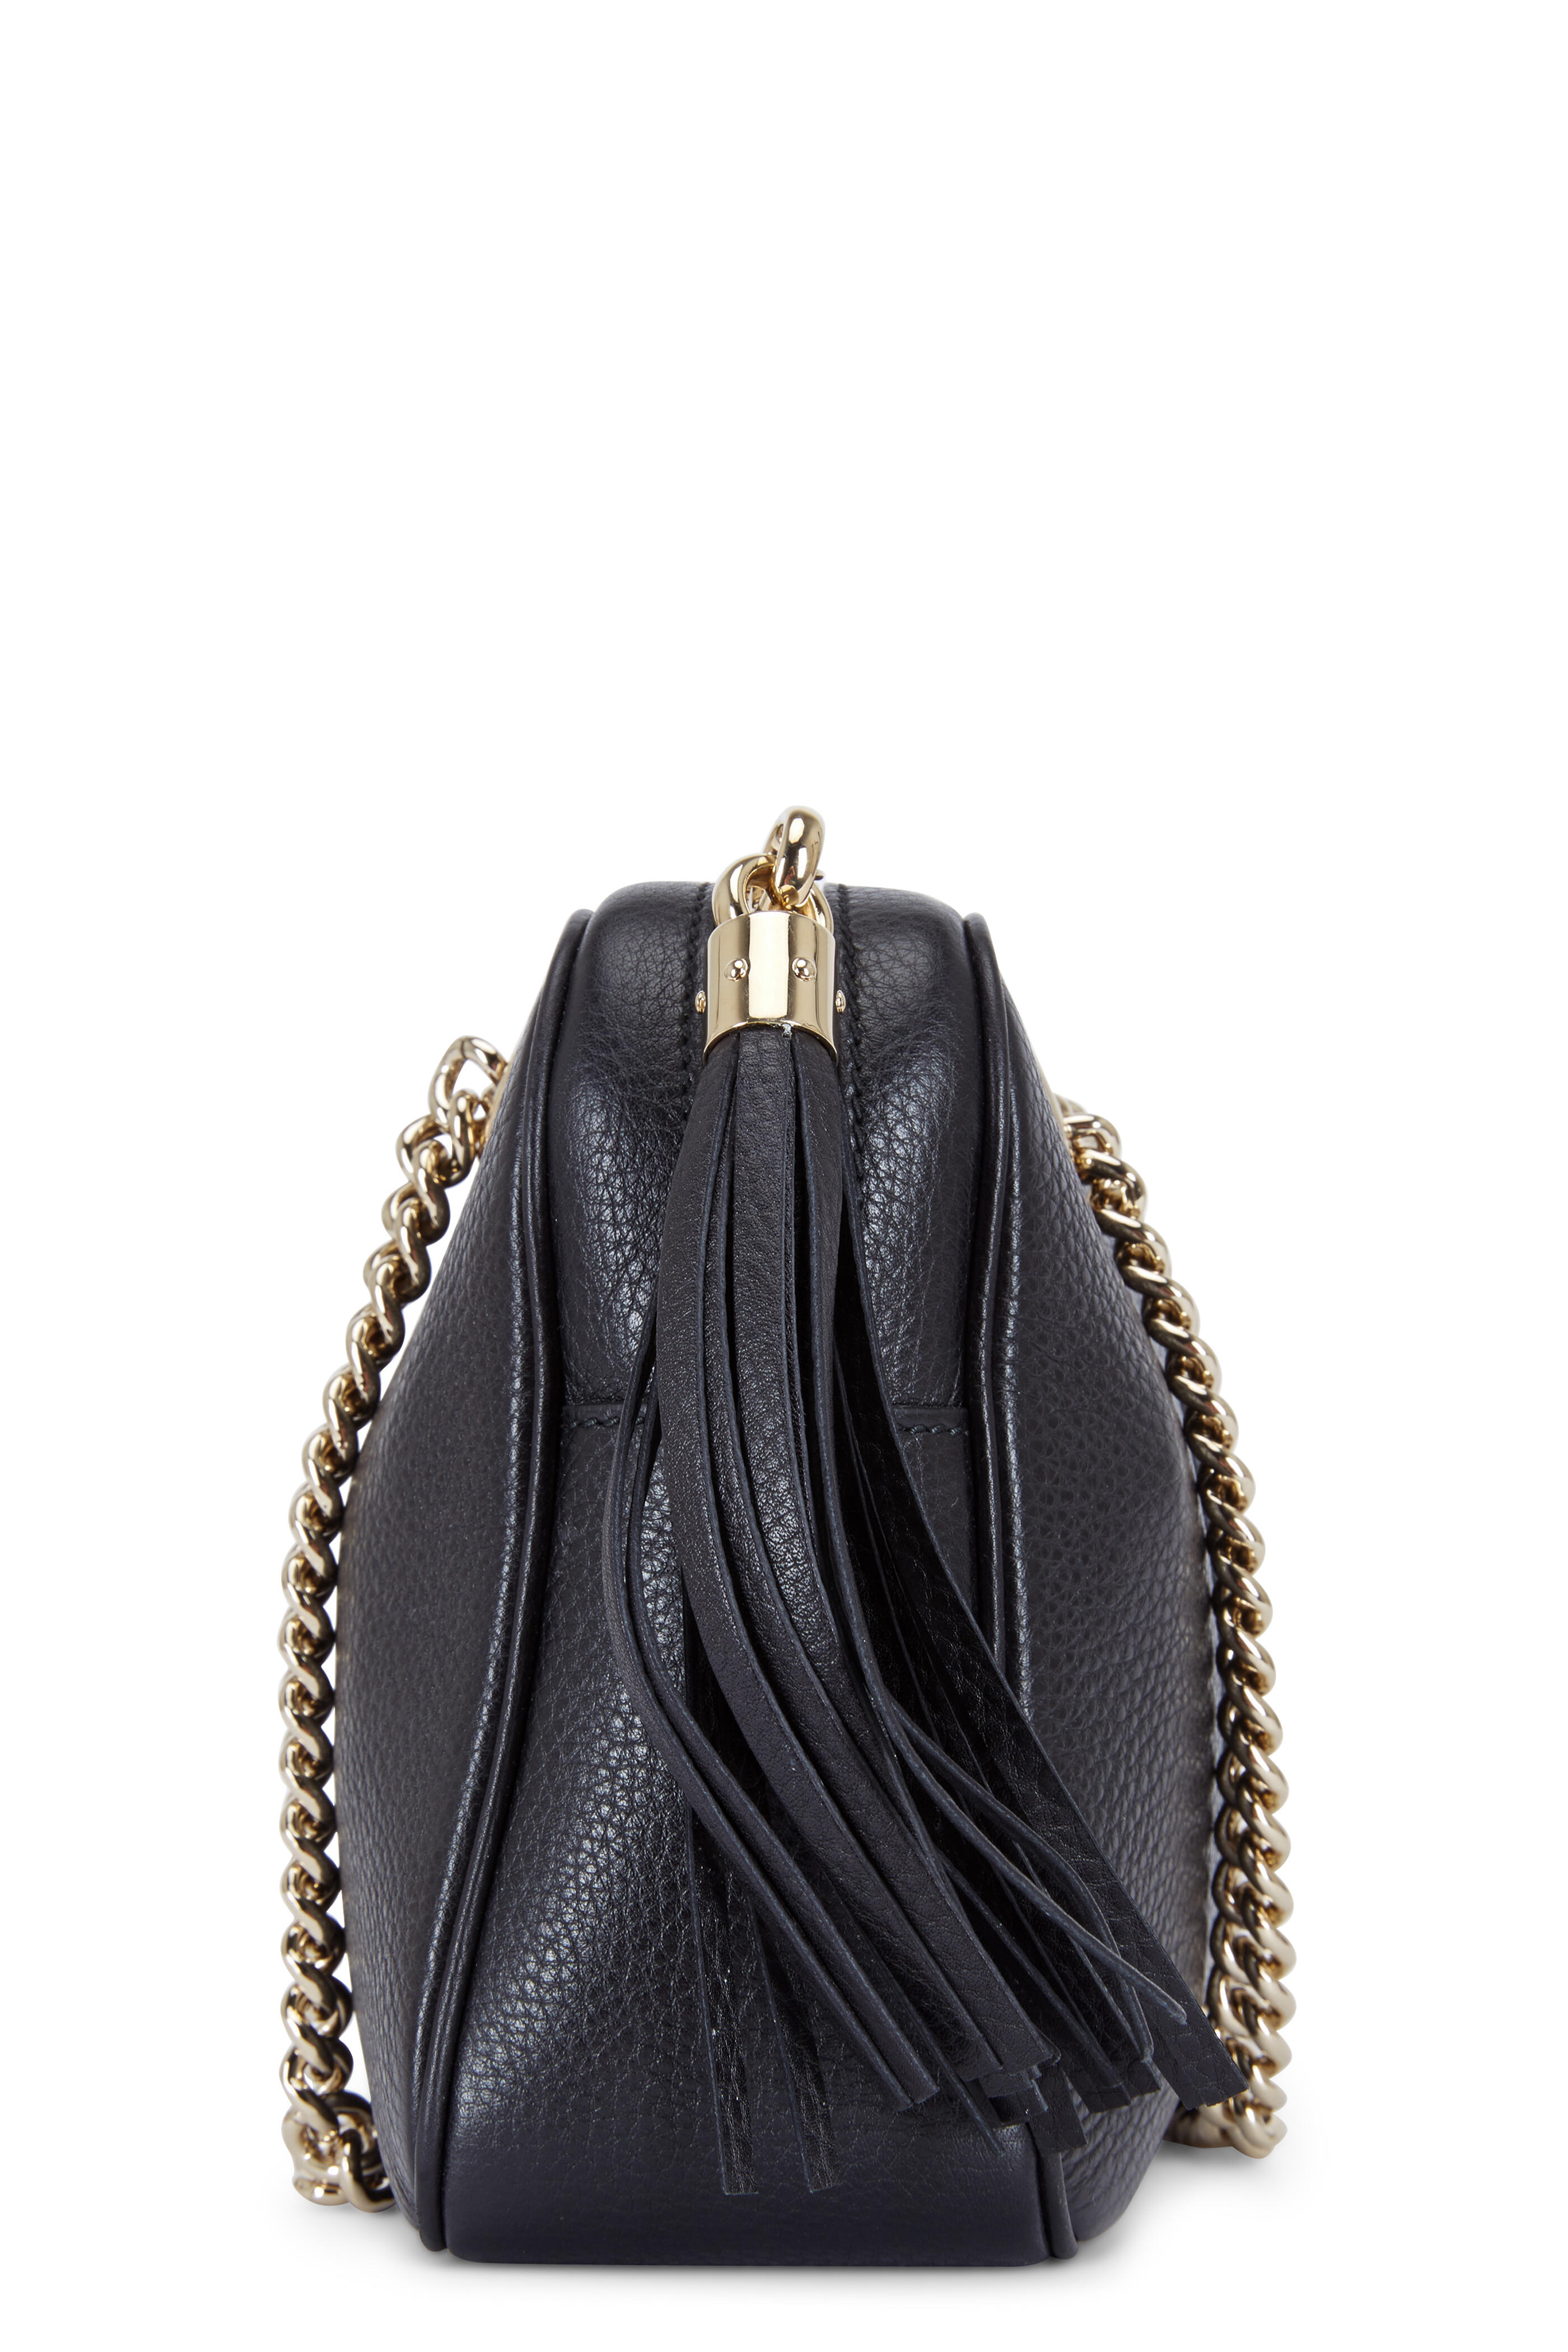  Gucci Soho Large Leather Chain Shoulder Handbag Black BHFO 5480  : Clothing, Shoes & Jewelry